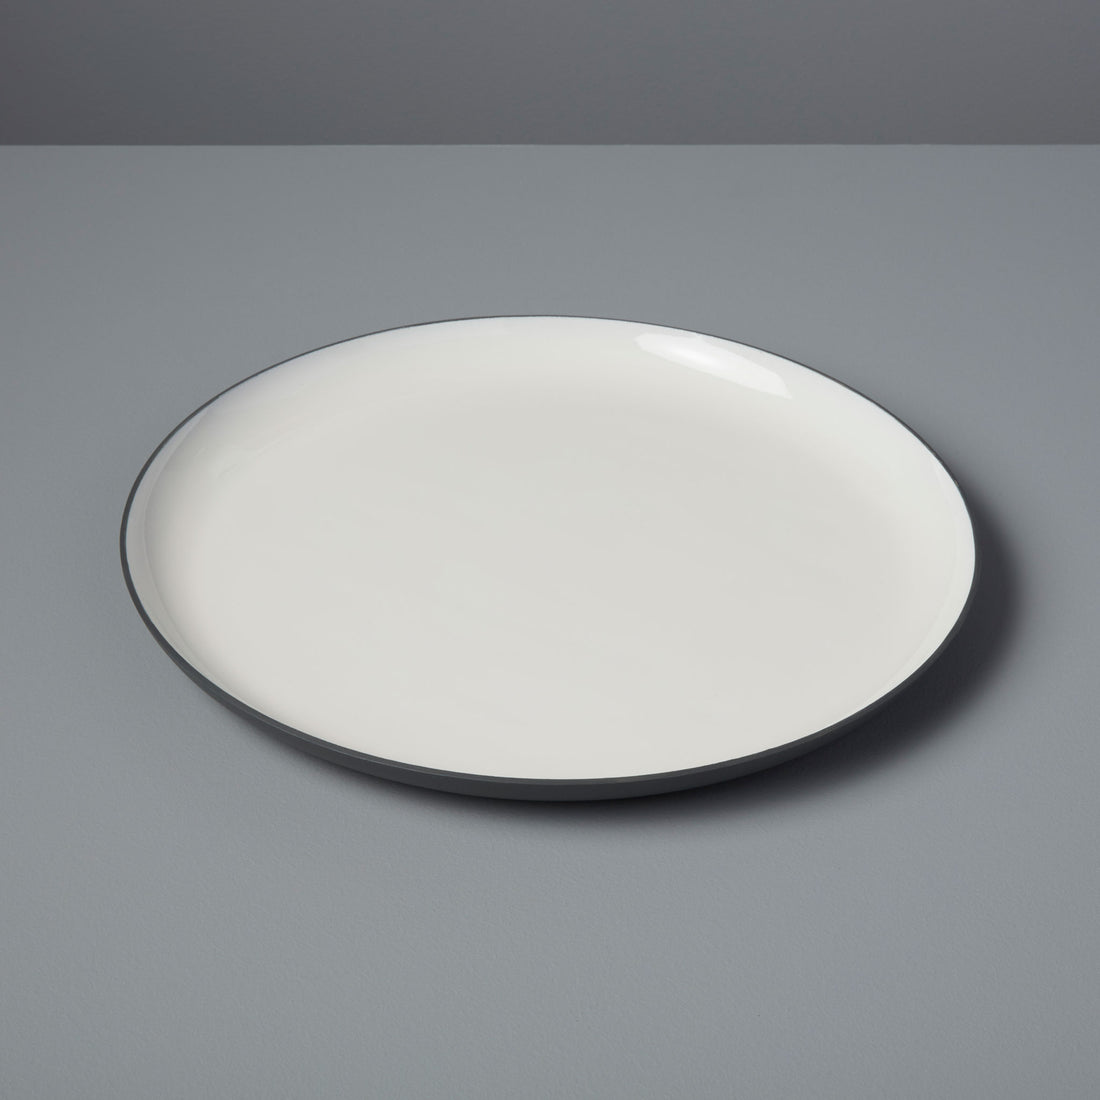 Easton Large Round Platter, Graphite